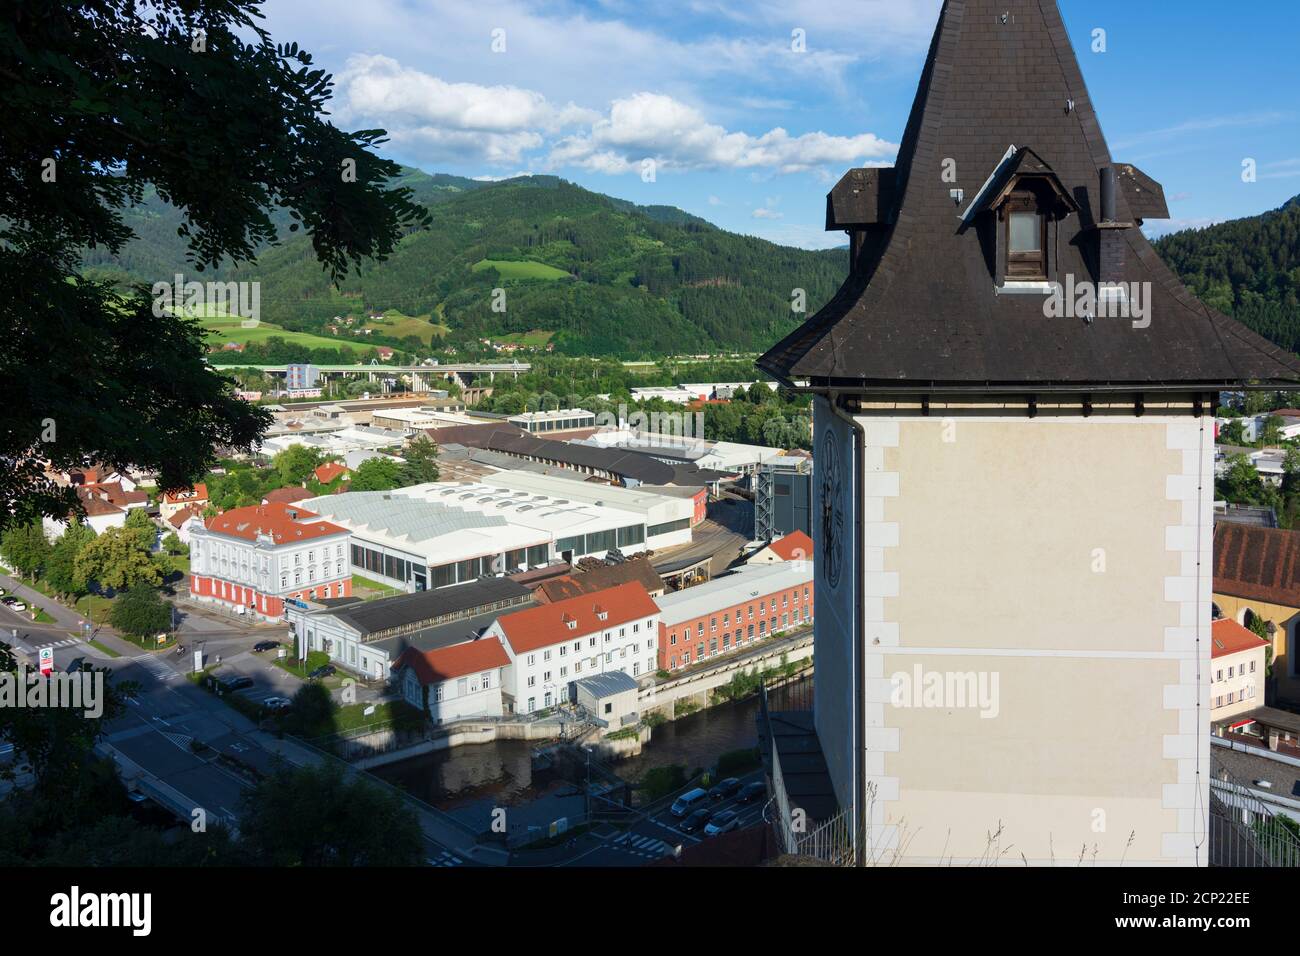 Bruck an der Mur, torre dell'orologio sullo Schlossberg, fabbrica di tecnologia voestalpine a Murau-Murtal, Steiermark/Stiria, Austria Foto Stock